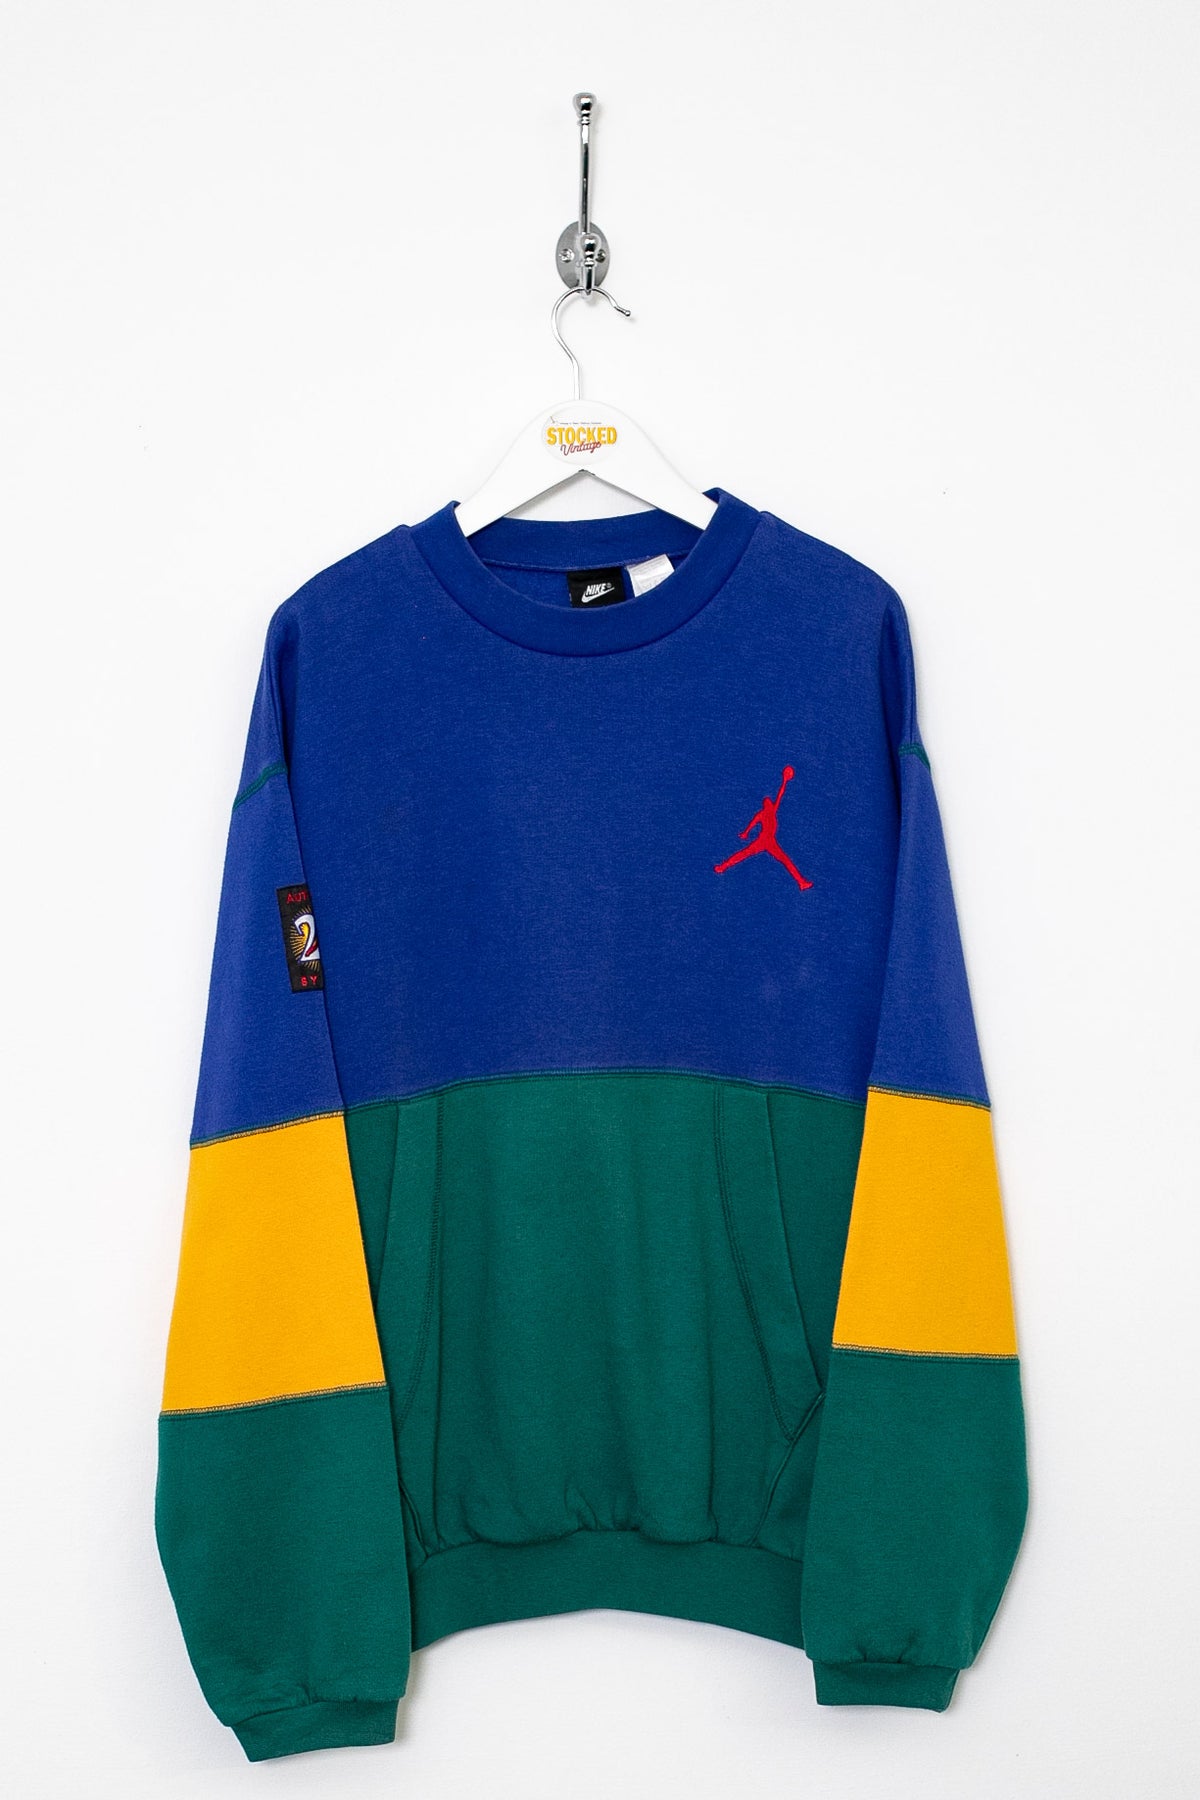 Rare 90s Nike Jordan Sweatshirt (M)